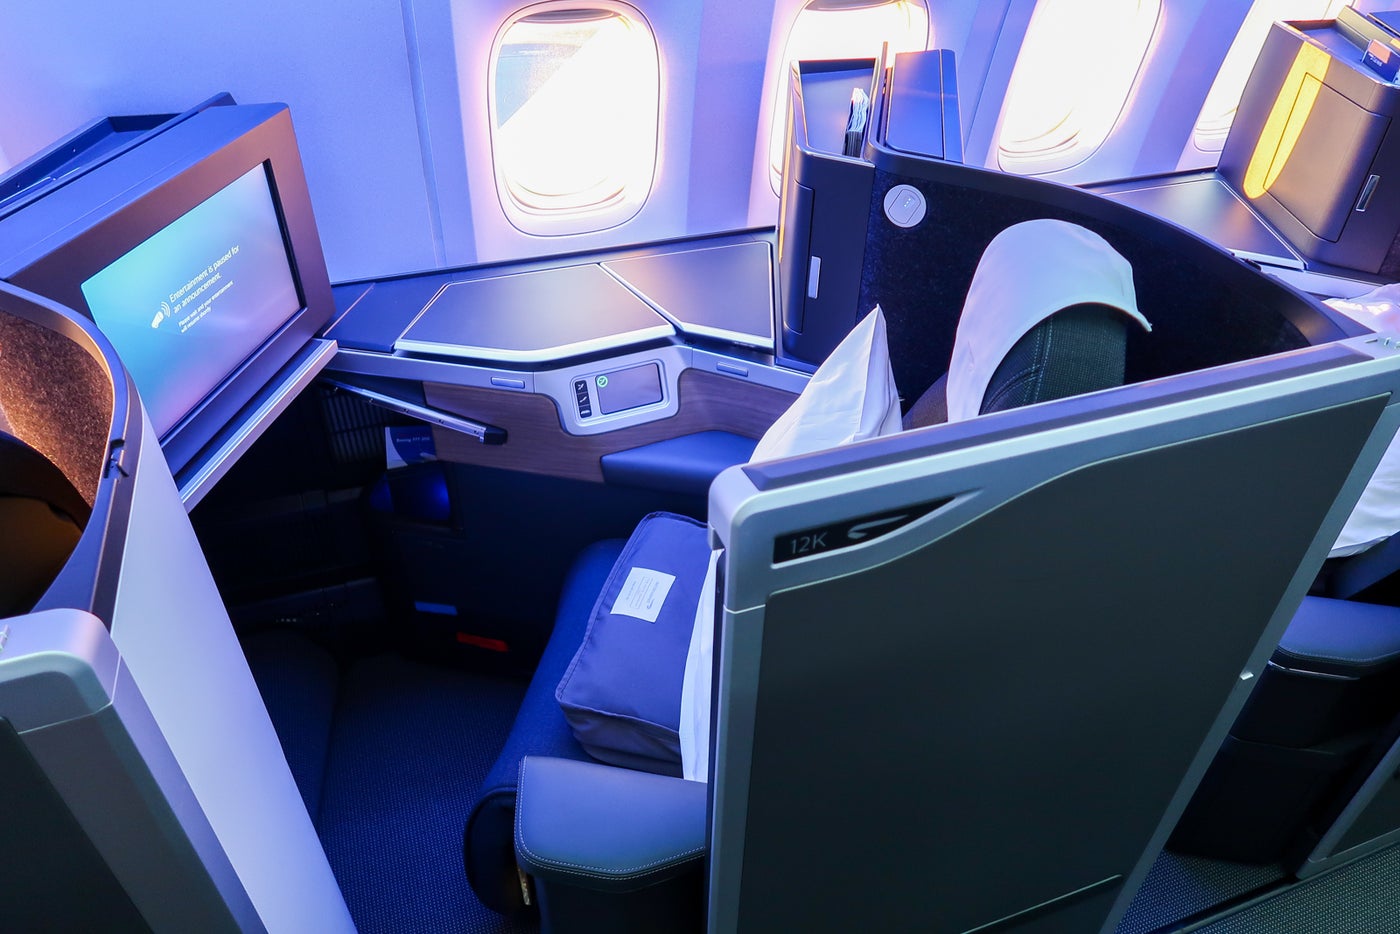 Review: British Airways Club Suite on the refurbished 777